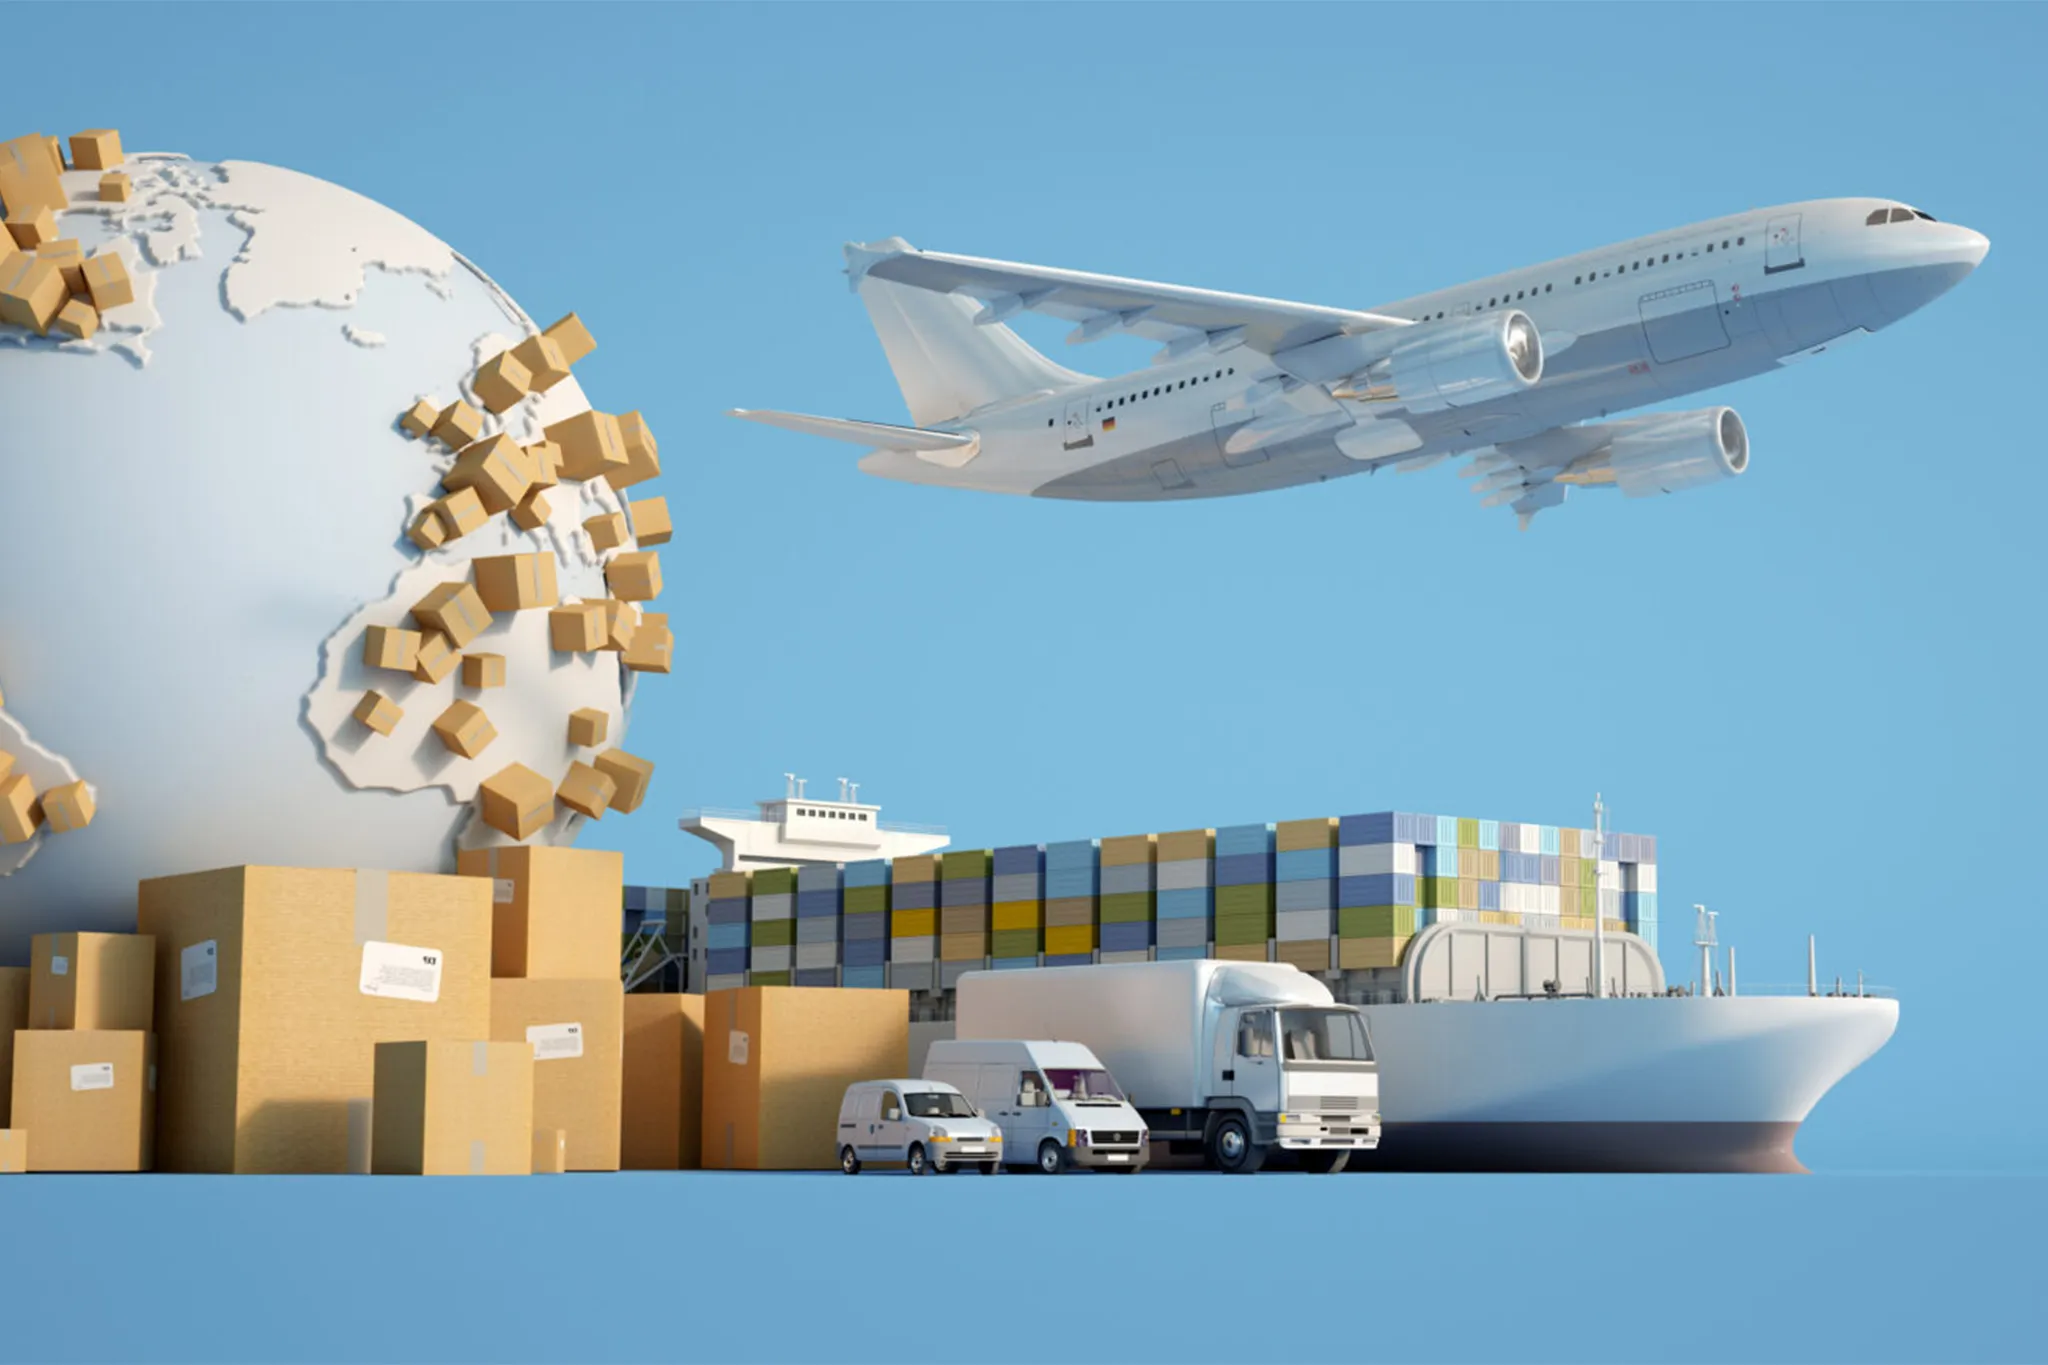 Ocean Freight Carriers Investing in Aircraft - International Forwarding  Association BlogInternational Forwarding Association Blog